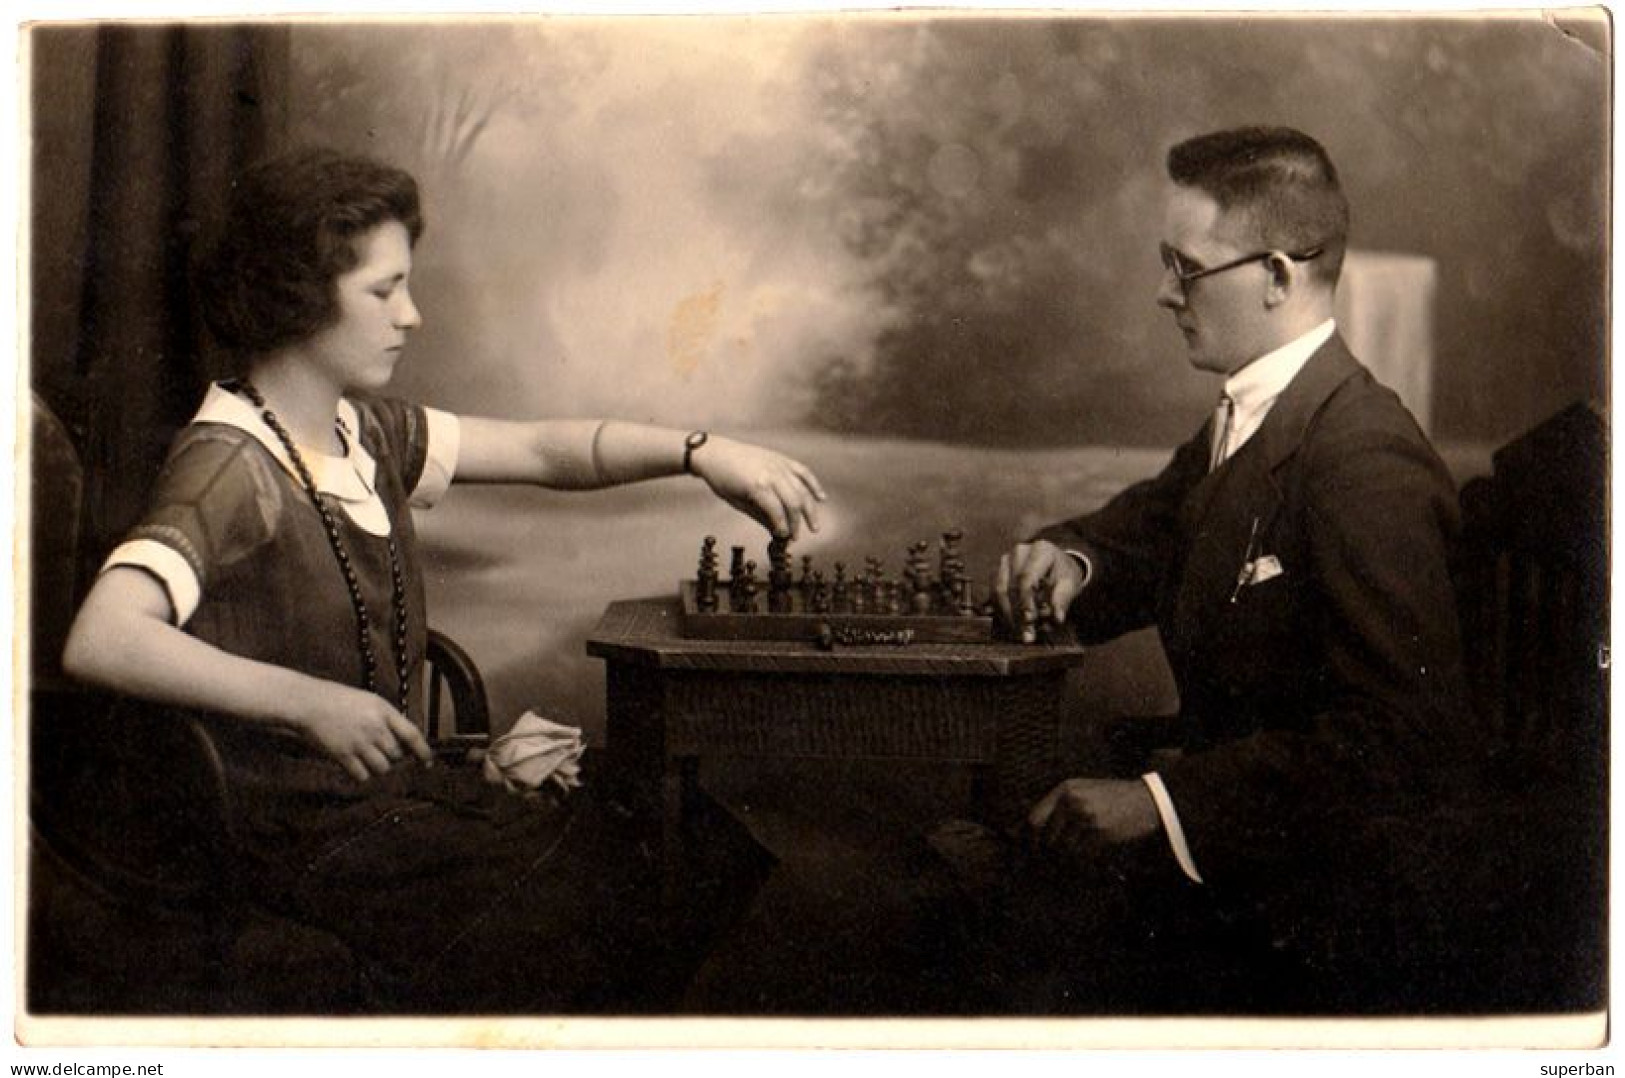 ECHECS / CHESS : ROUMANIE / ROMANIA : CHESS GAME / PARTIE D'ECHECS - CARTE VRAIE PHOTO / REAL PHOTO ~ 1935 - '40 (an322) - Echecs